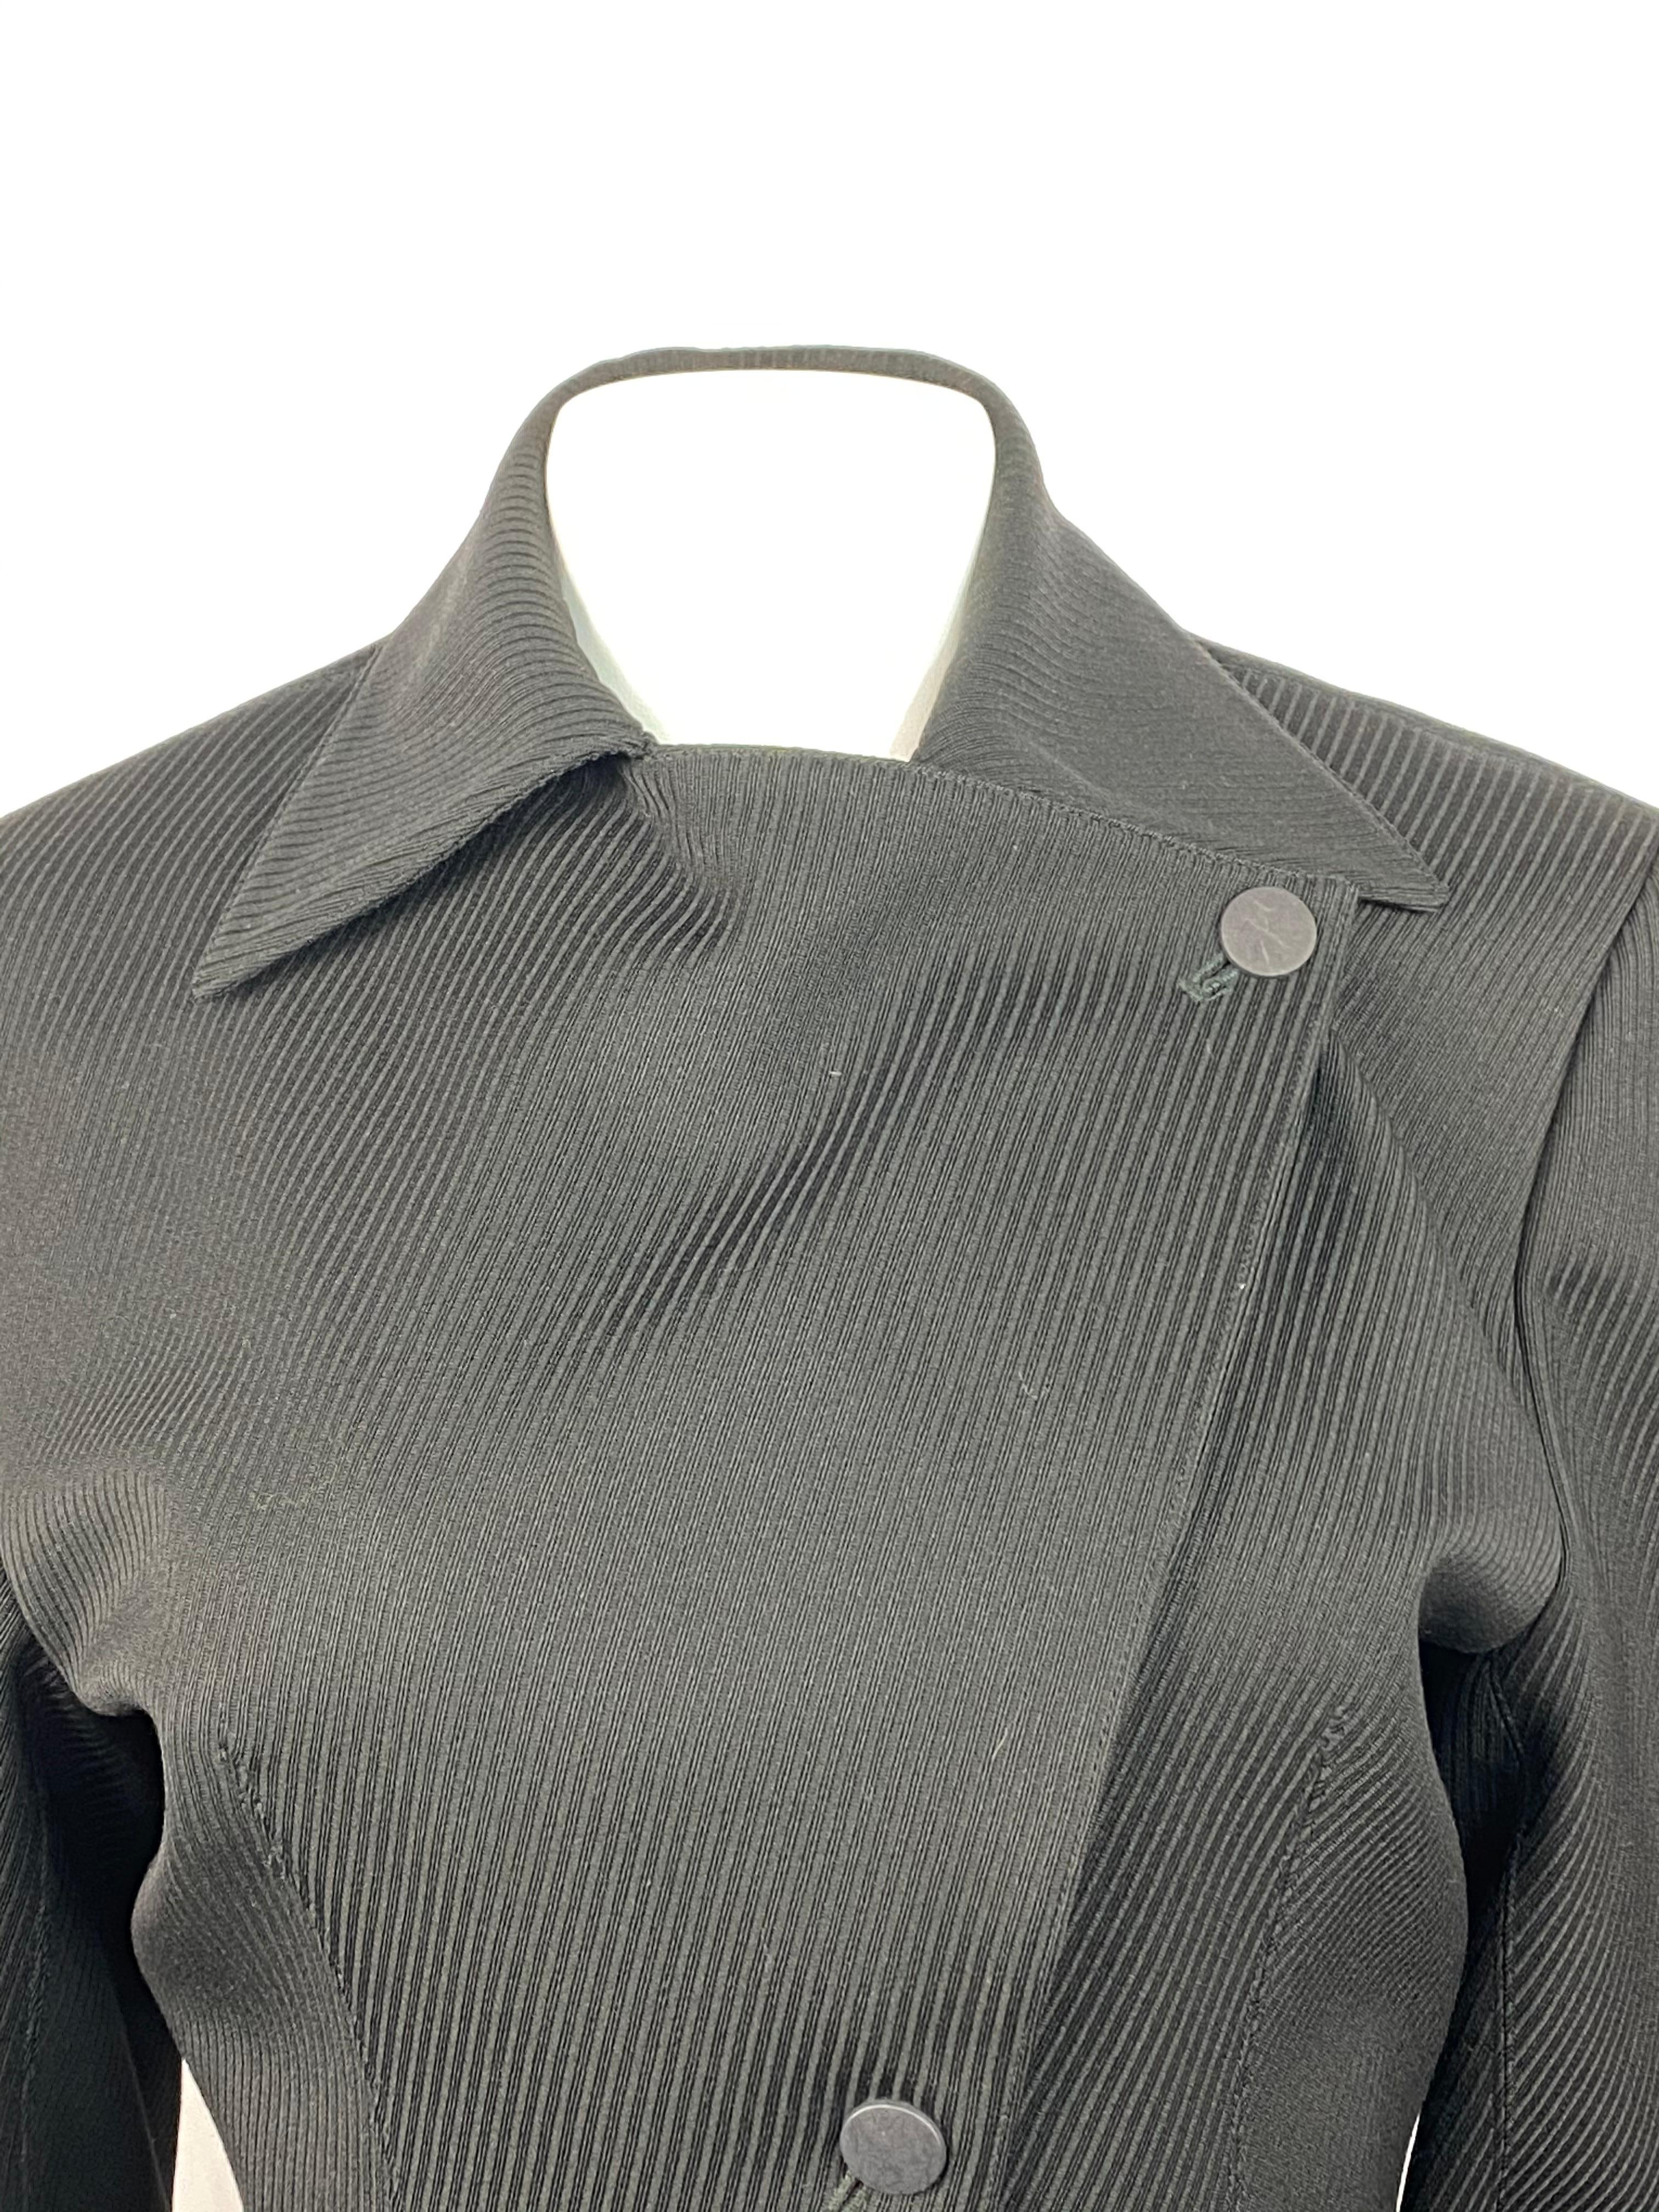 Alaia Black Wool Blazer Jacket Size 38 For Sale 4